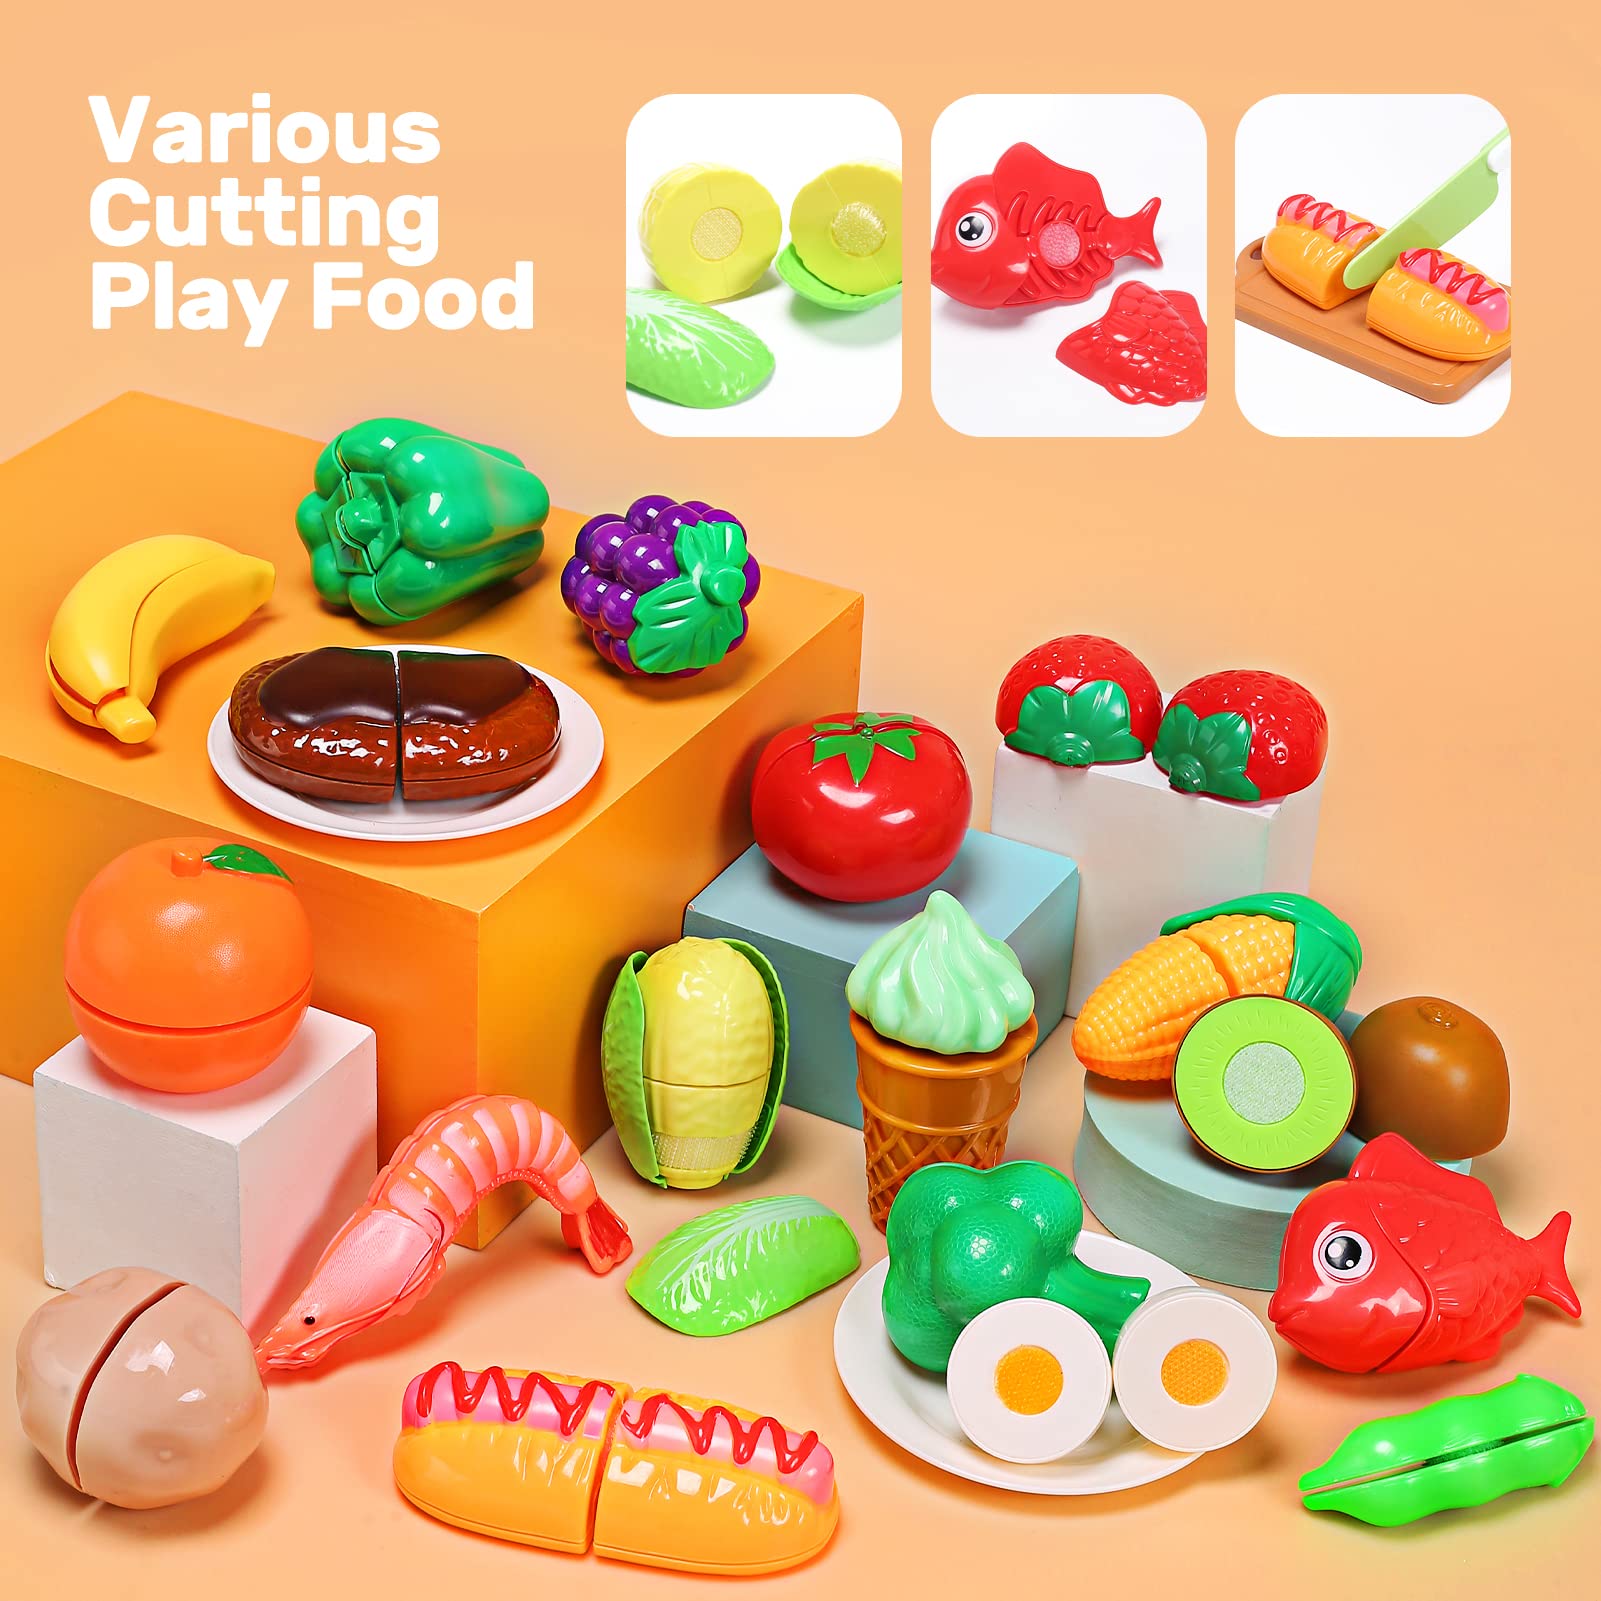 Fridja Cute Stone Kids Kitchen Pretend Play Toys Cooking Utensils Accessories Gift